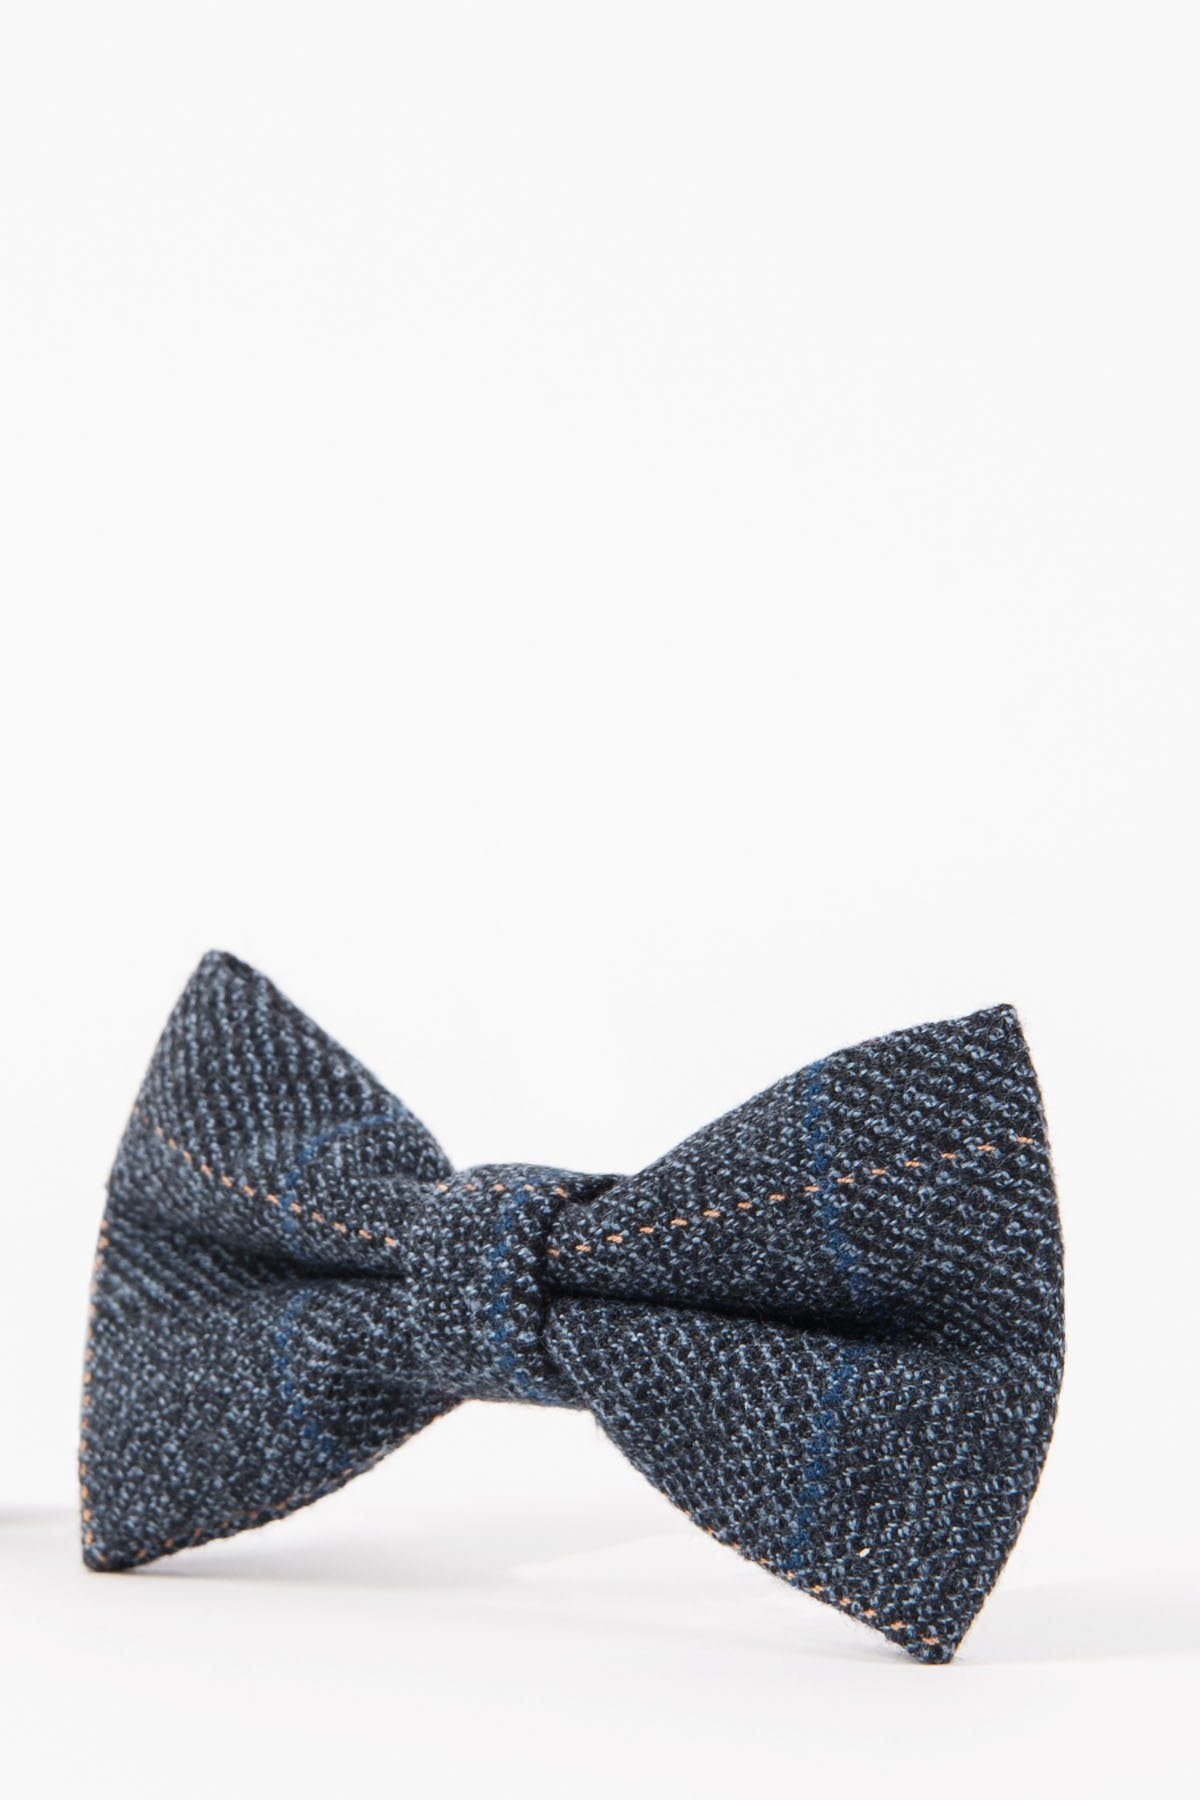 Scott blue tweed bow tie